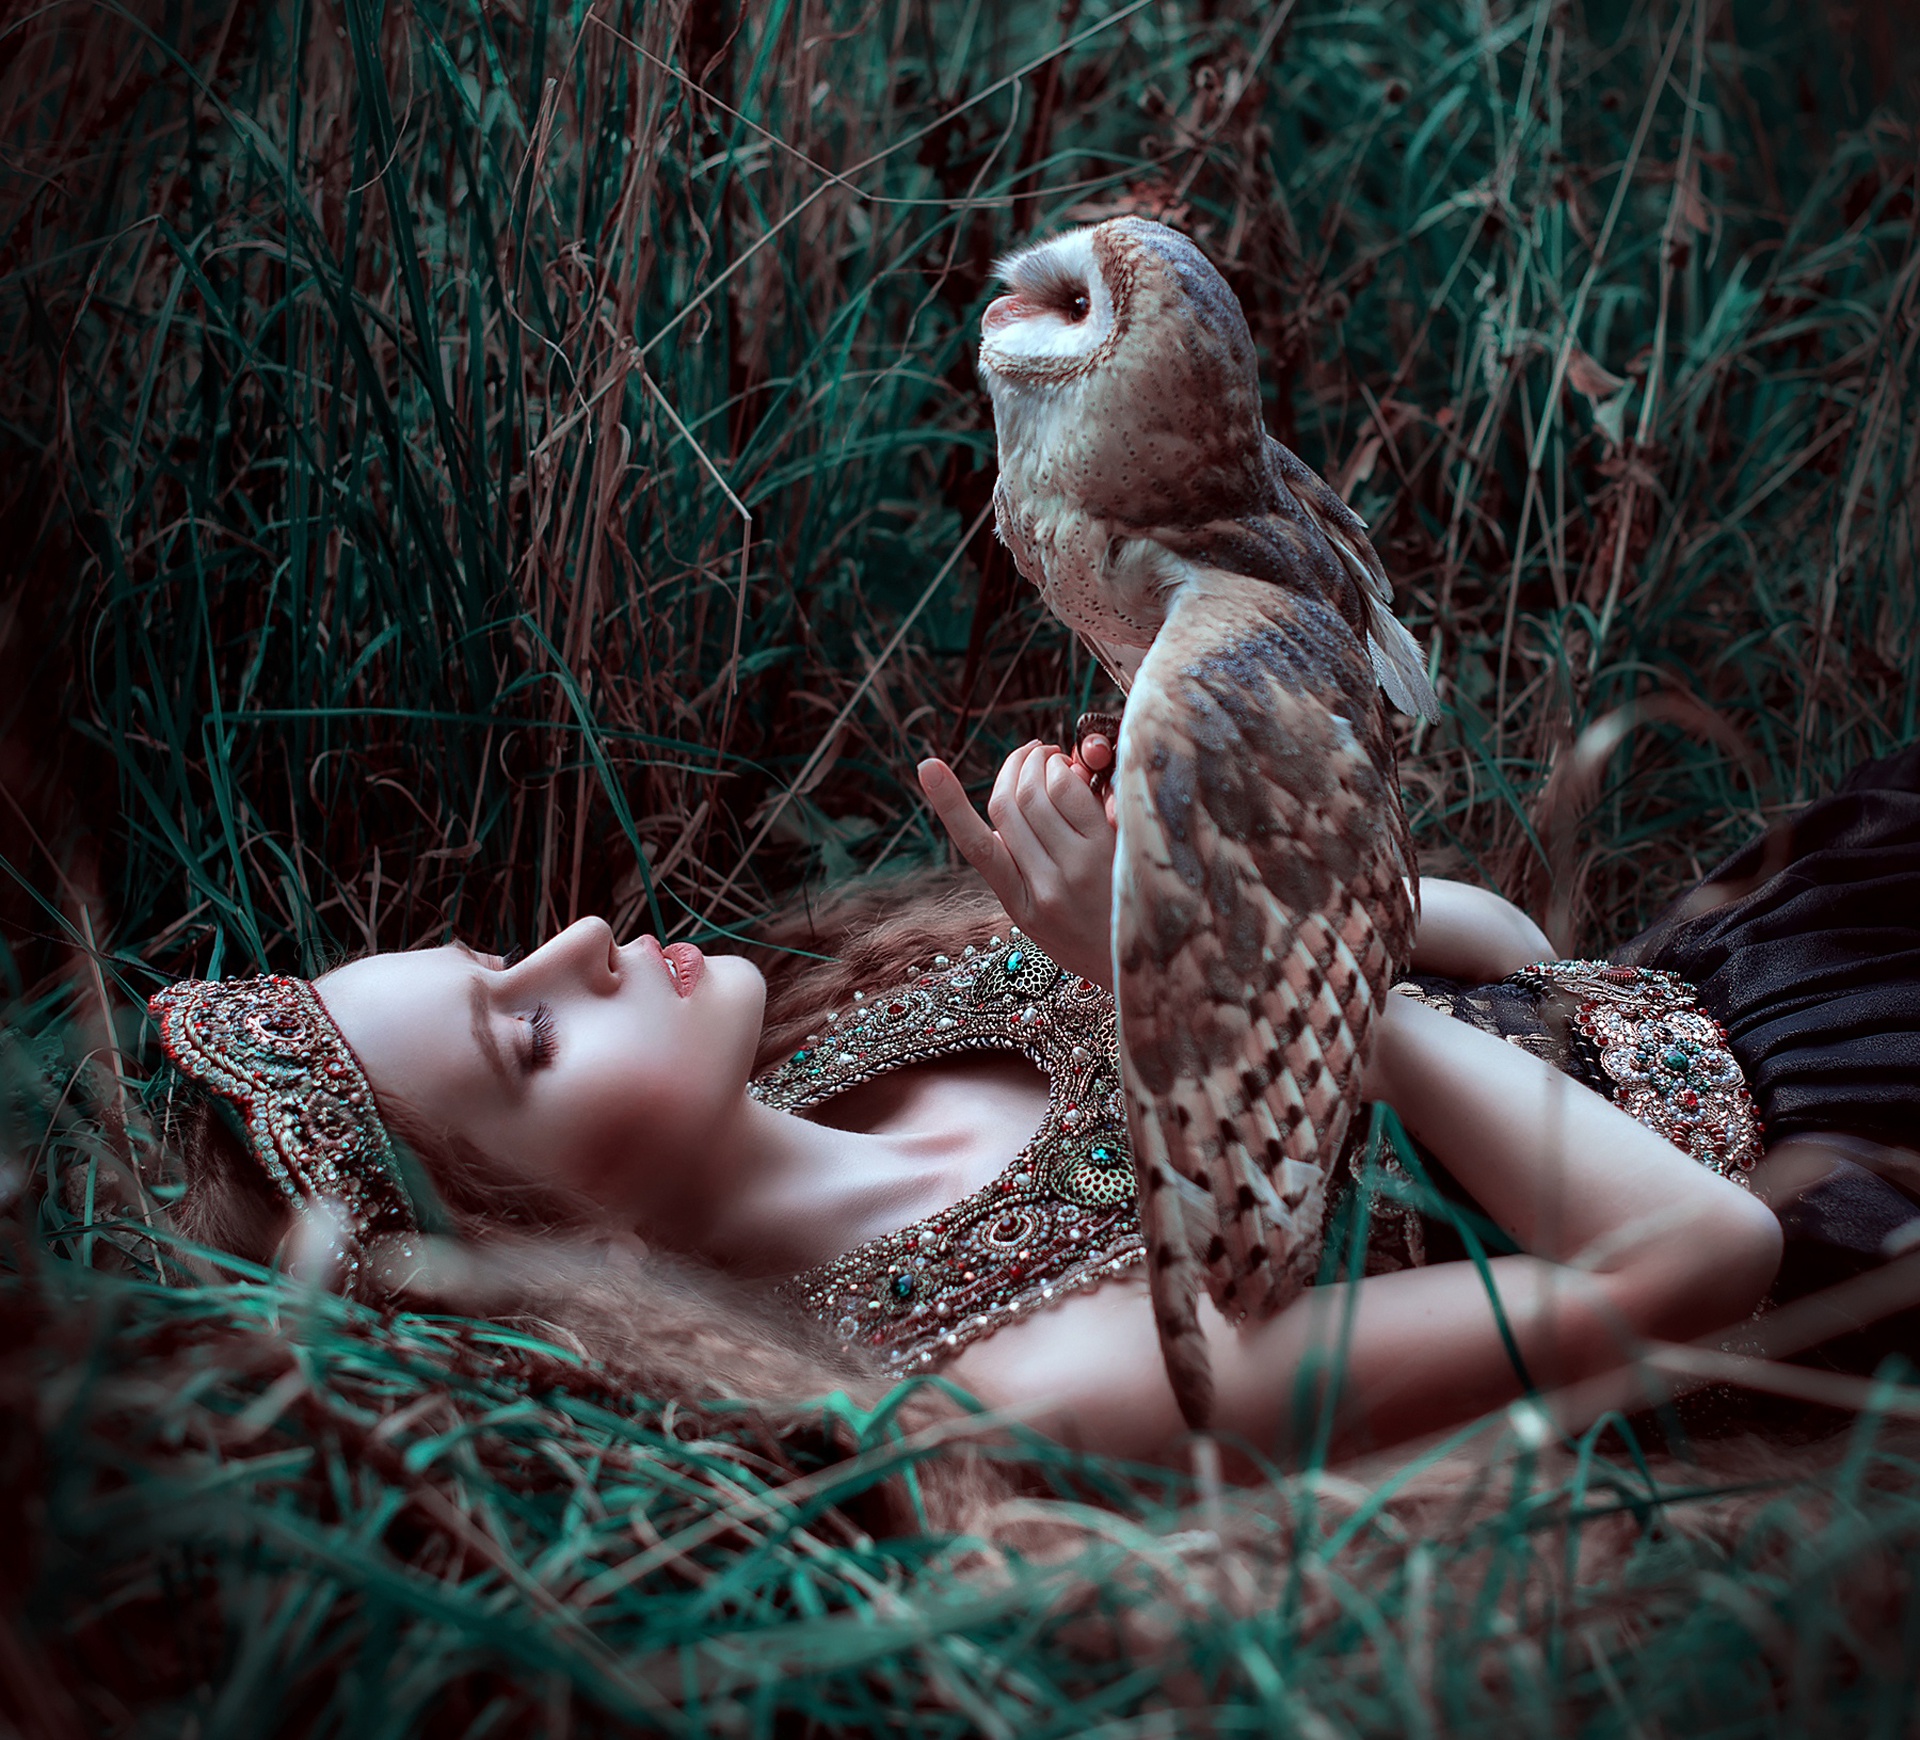 People 1920x1740 women model birds fantasy girl owl makeup grass plants women outdoors lying on back